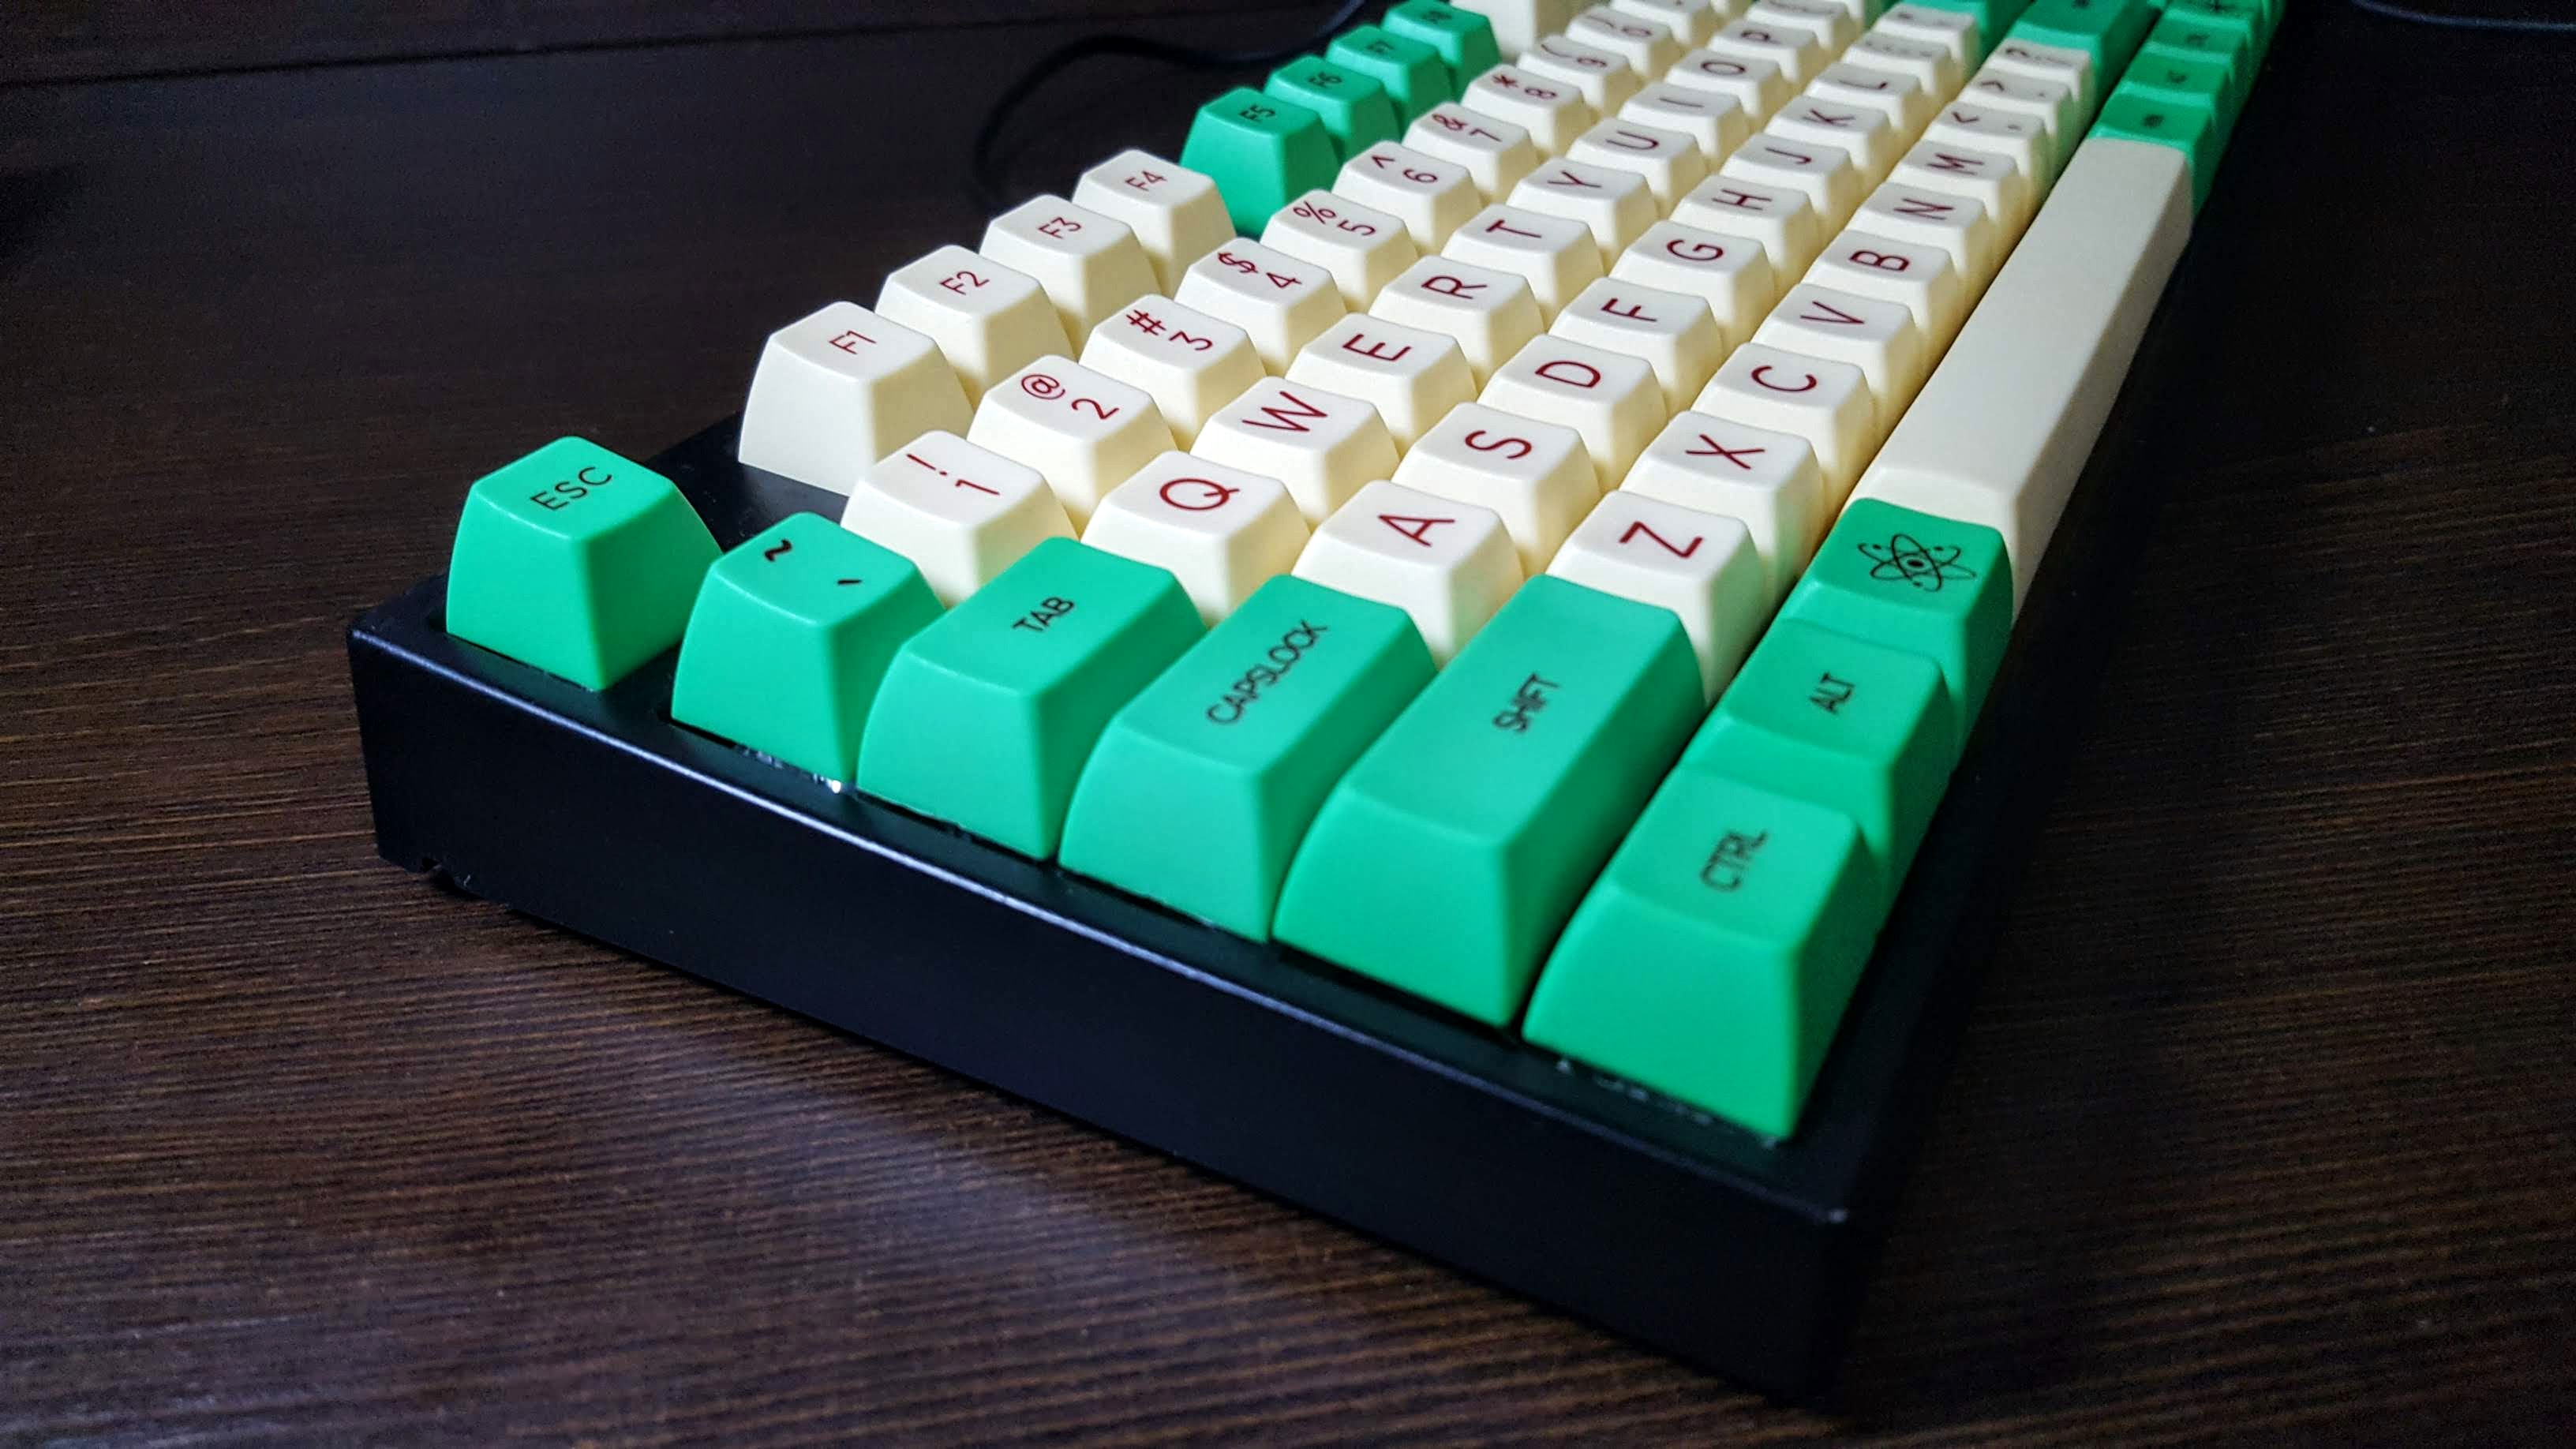 Figure 20: XD87 keyboard finished.